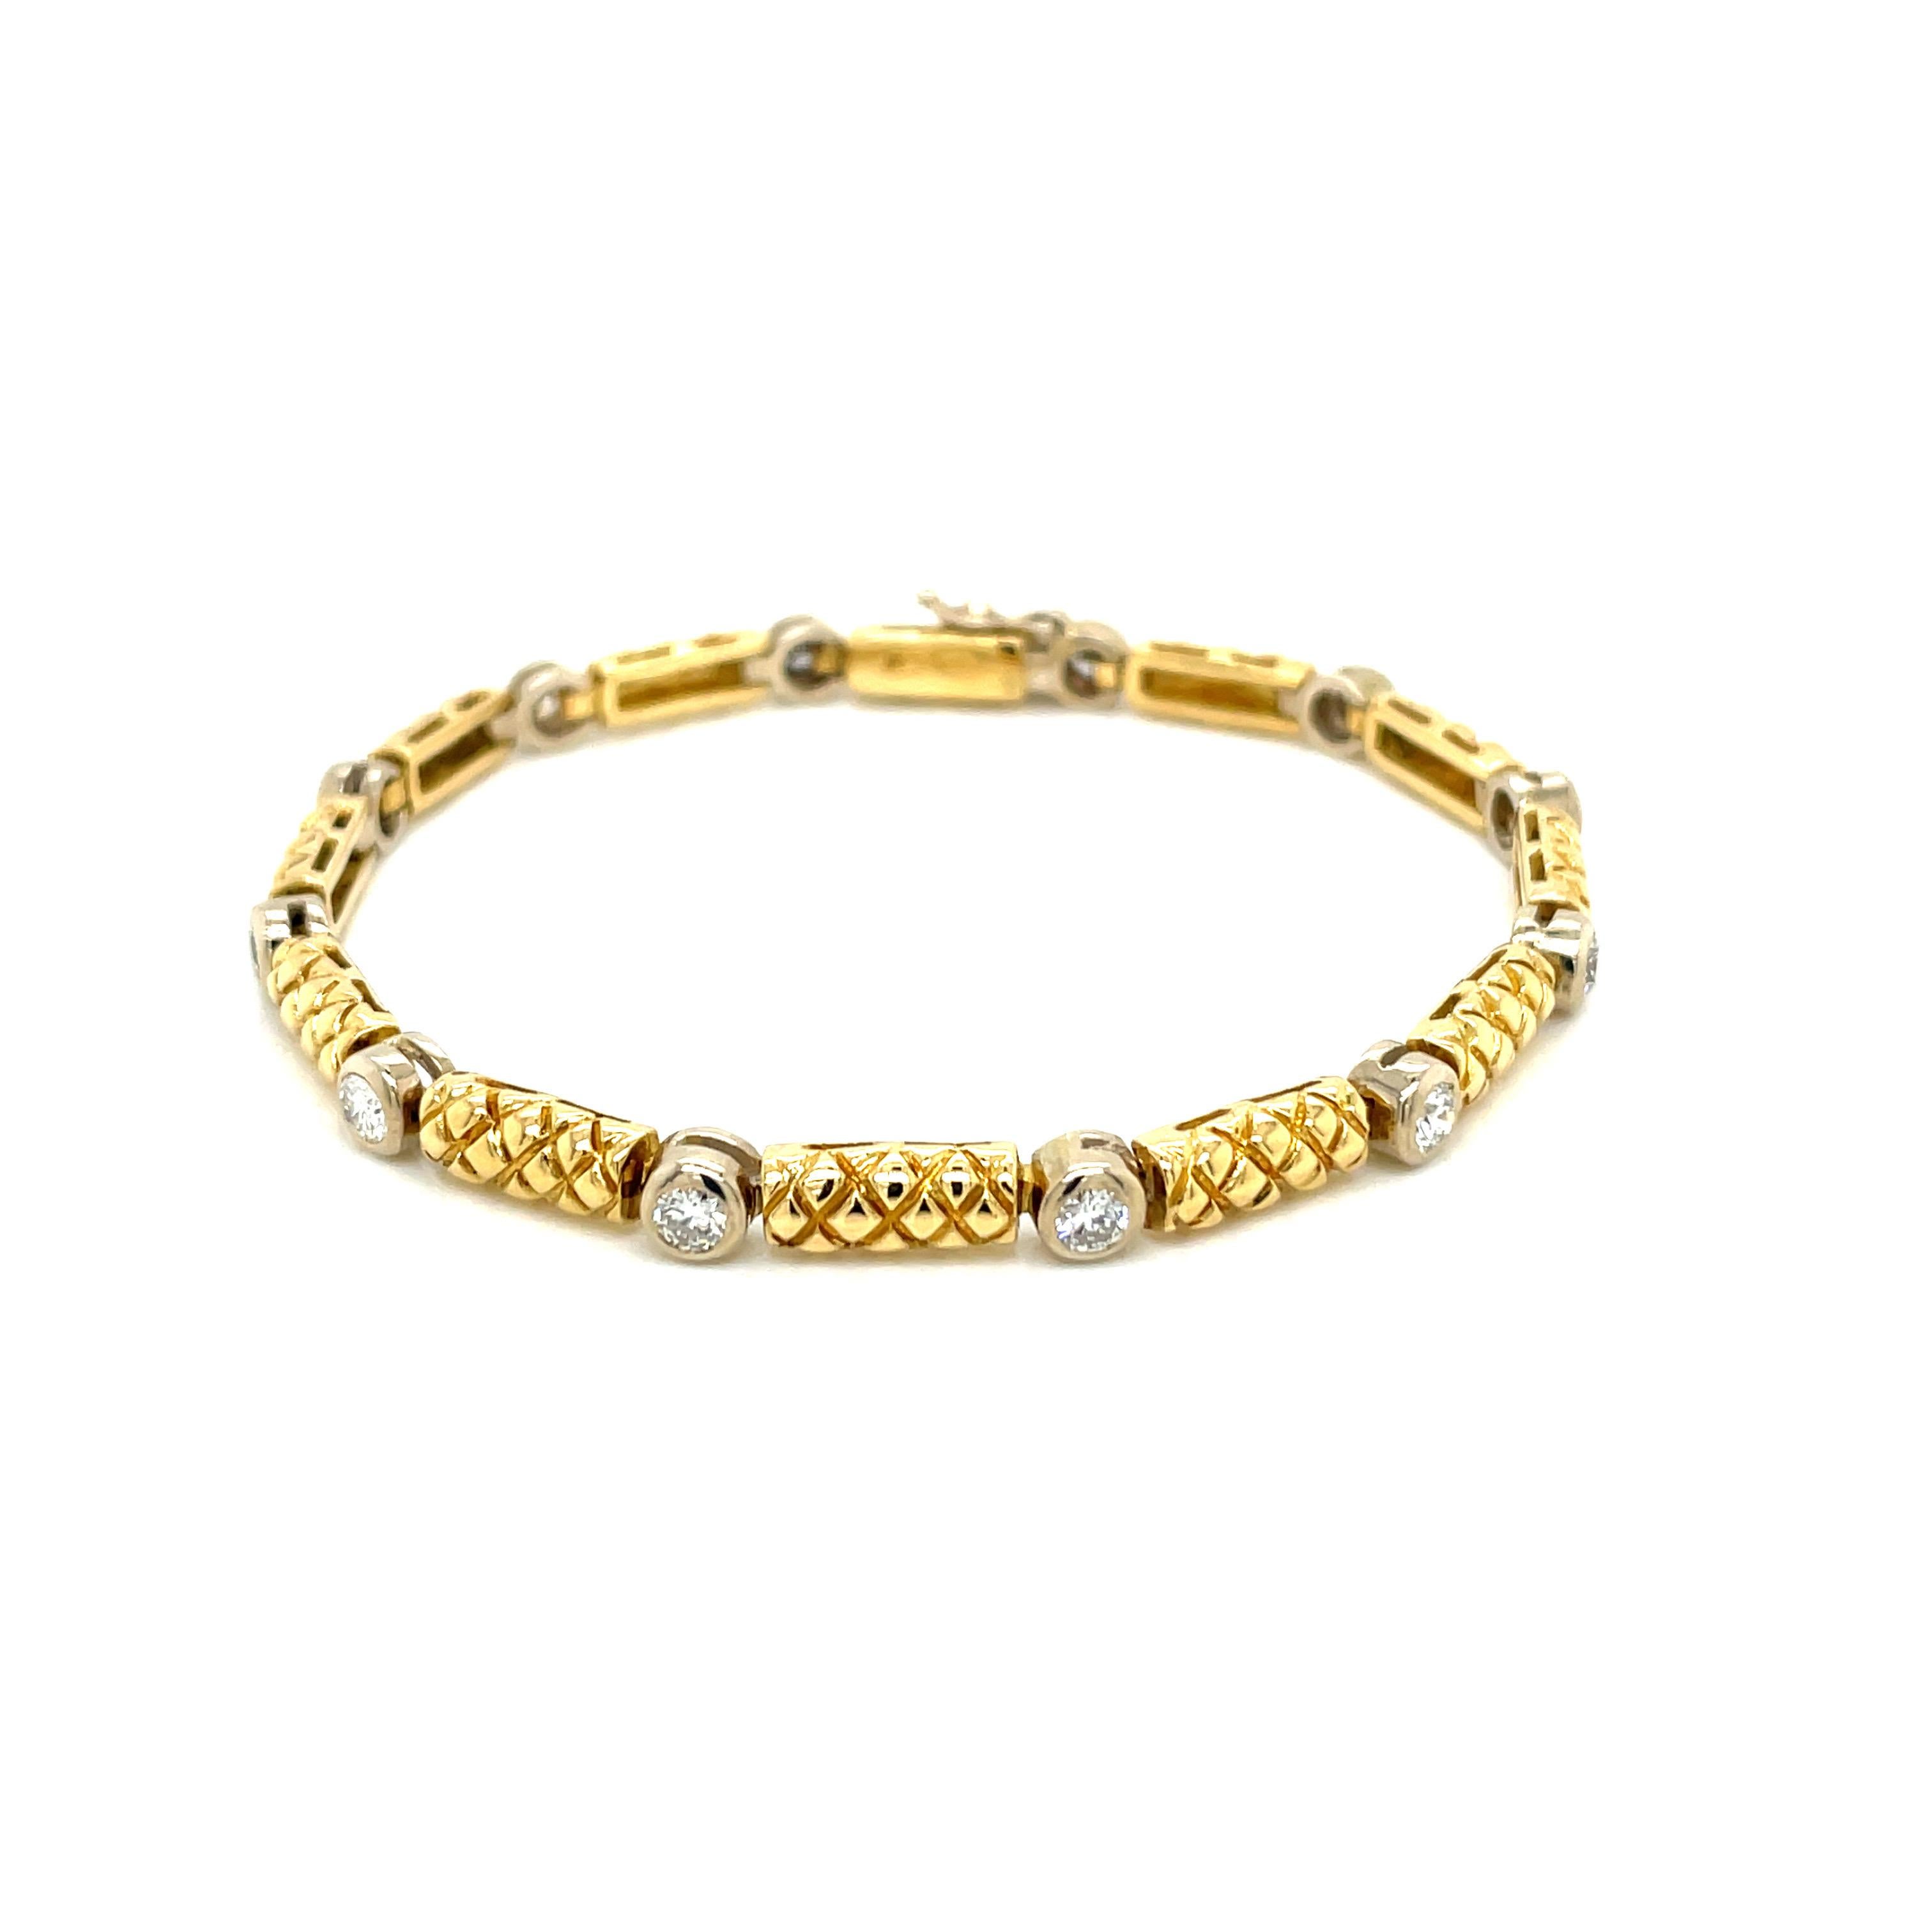 Vintage 18k yellow gold Link and Diamond Bracelet